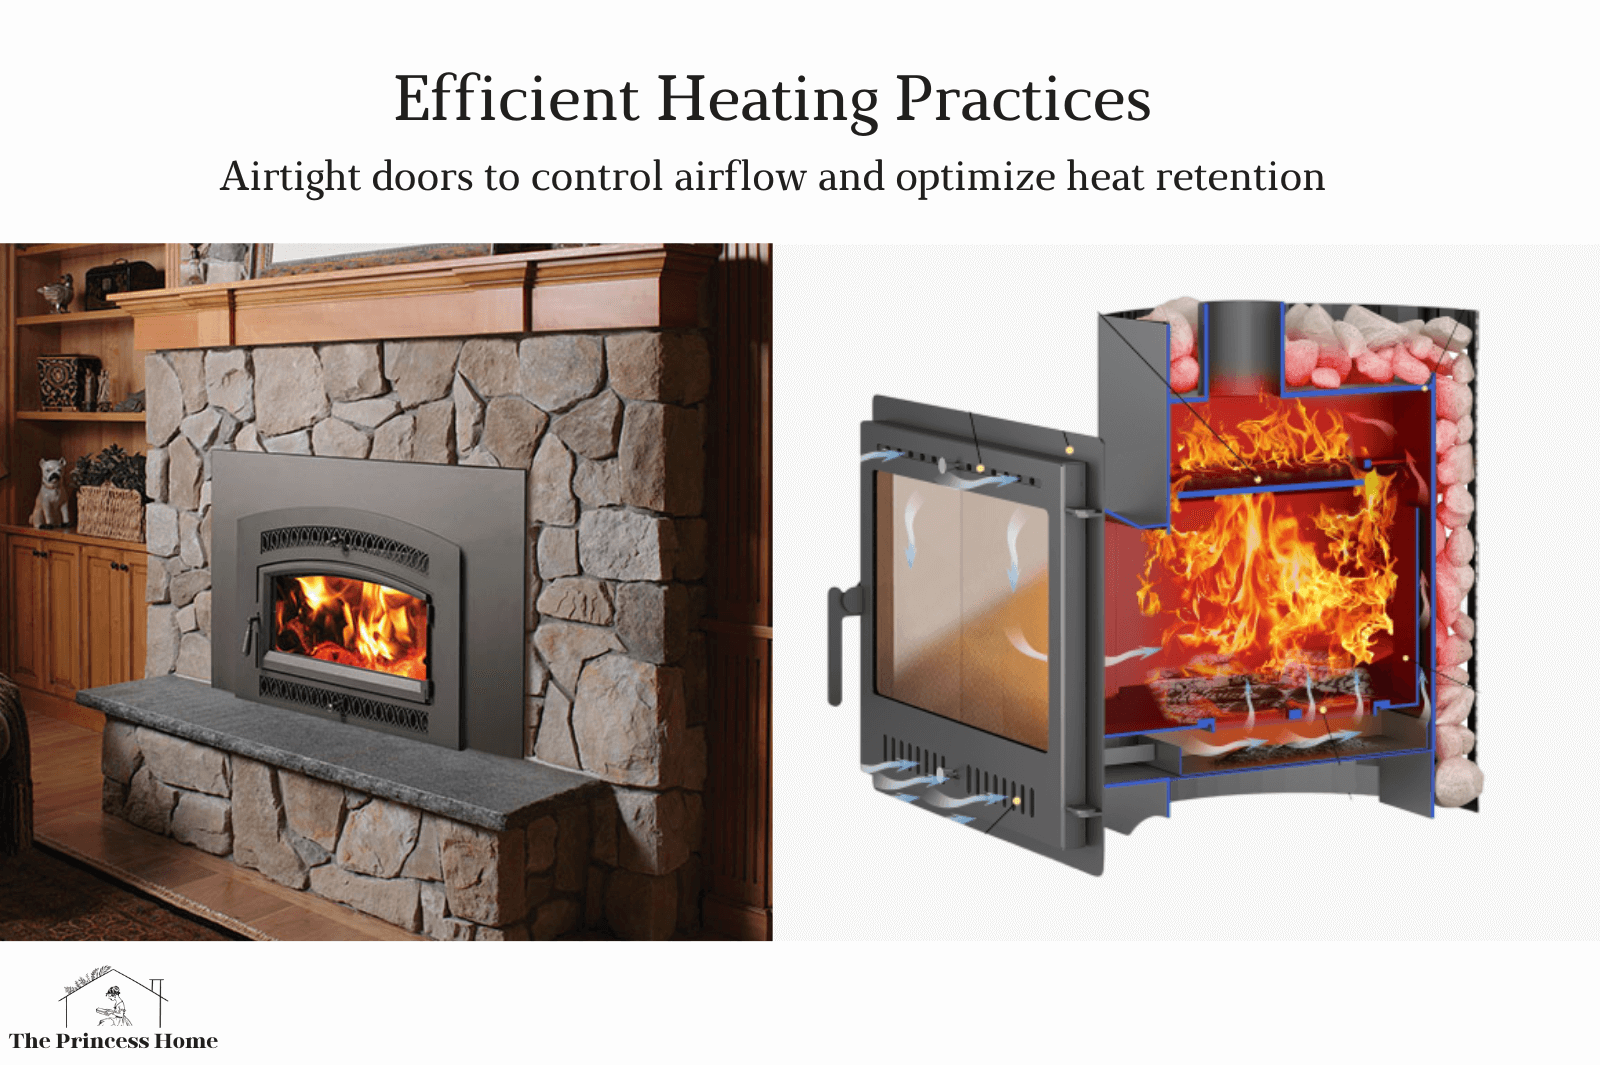 8.Efficient Heating Practices